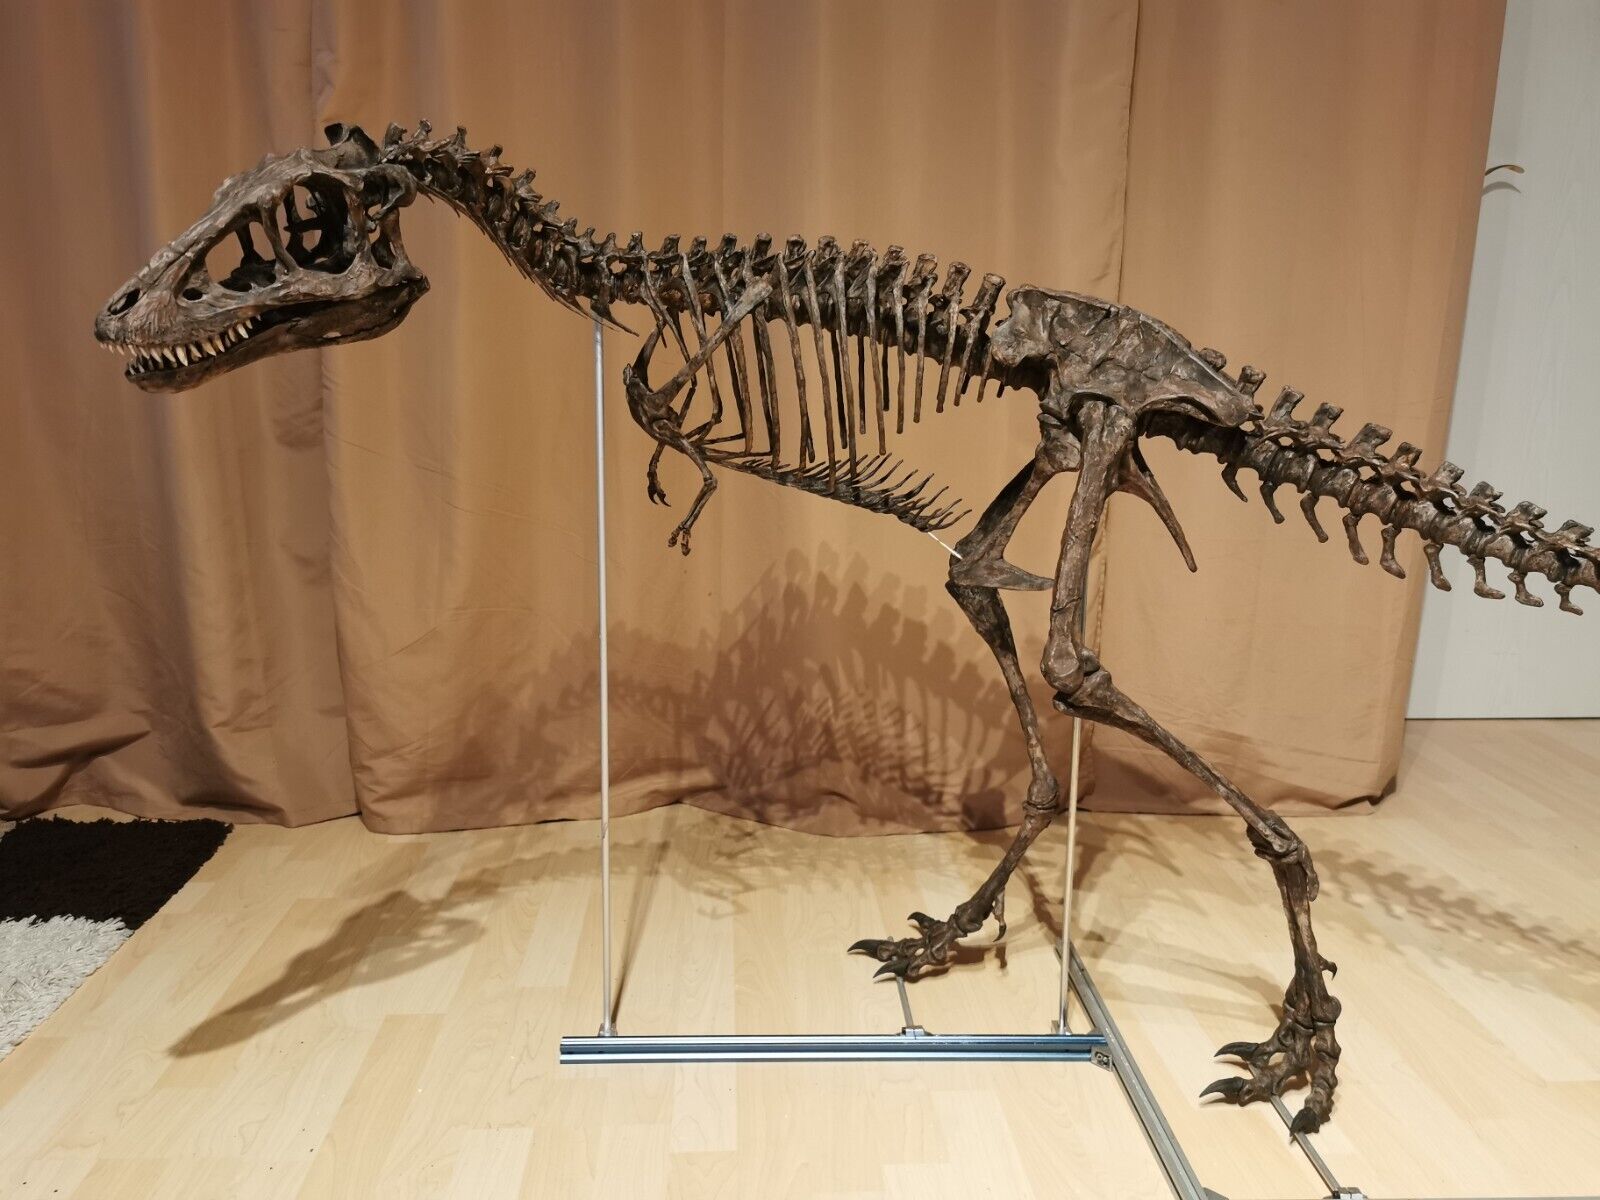 3d printed T-REX, Tyrannosaurus Rex baby skeleton model dinosaur 1:1